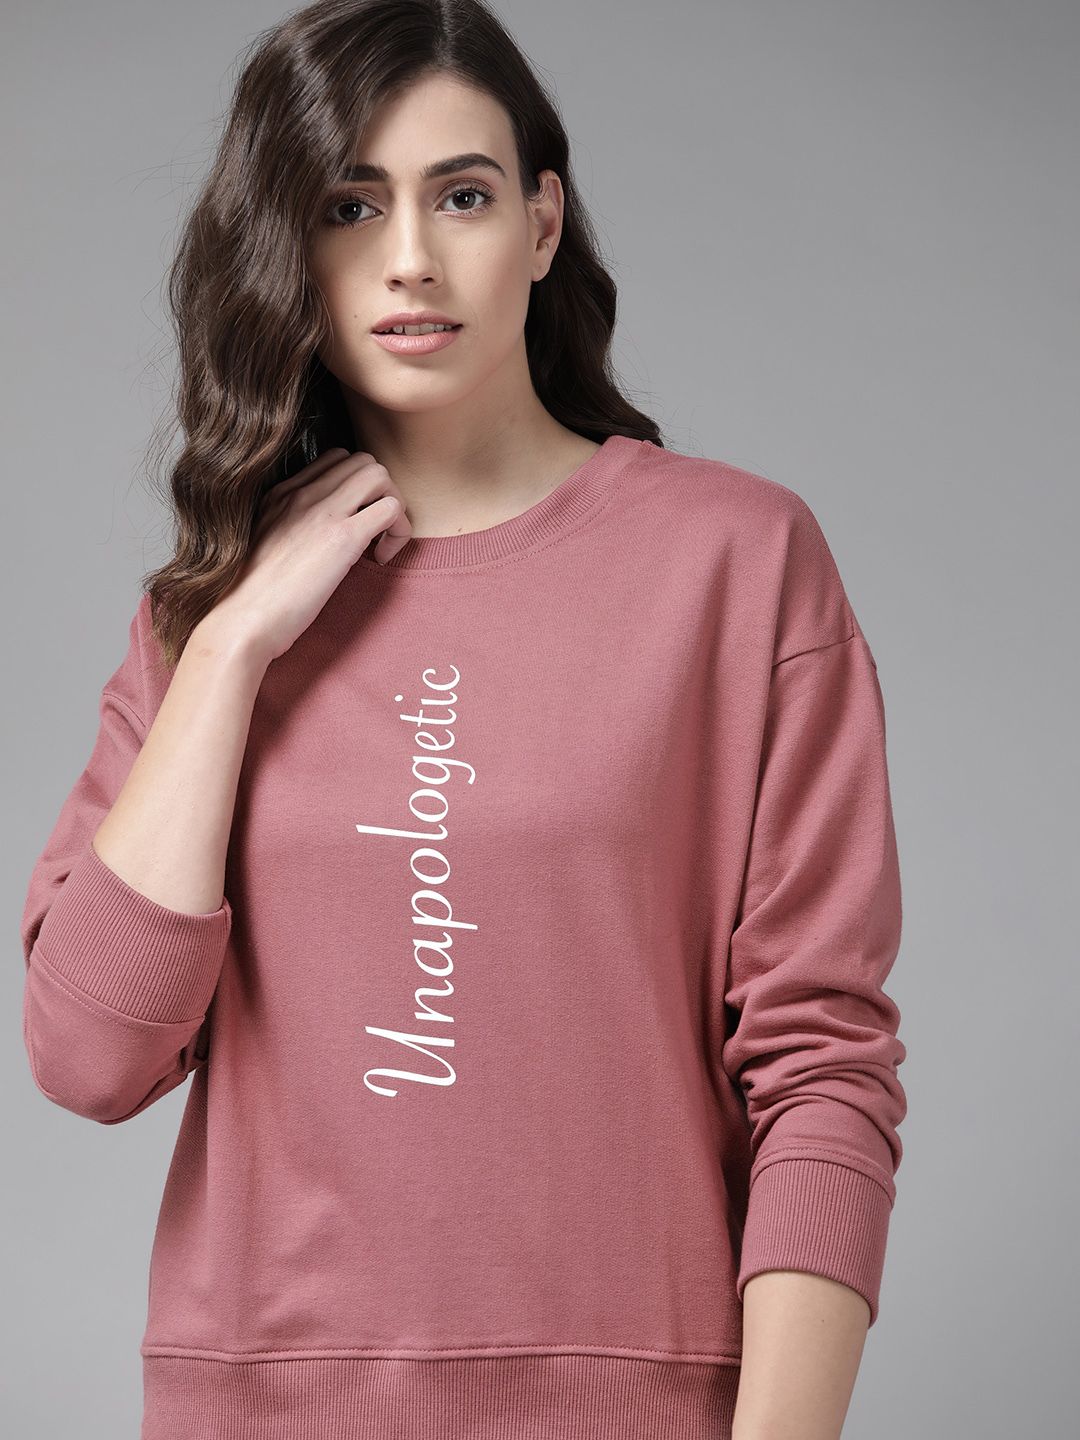 Roadster Women Pink & White Typography Print Sweatshirt Price in India